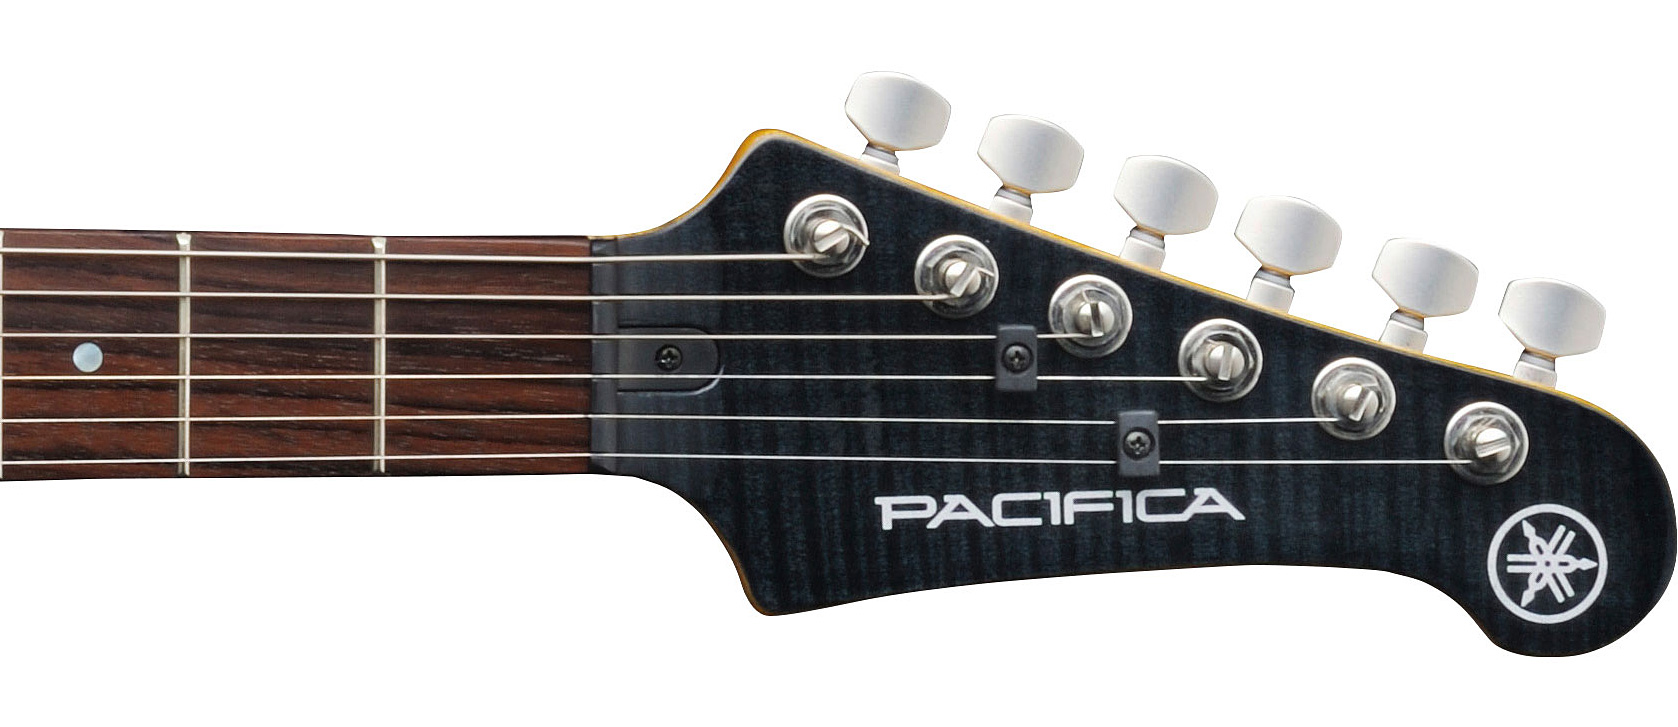 Yamaha Pacifica Pac611hfm Tbl Rw - Translucent Black - Guitarra eléctrica con forma de str. - Variation 3